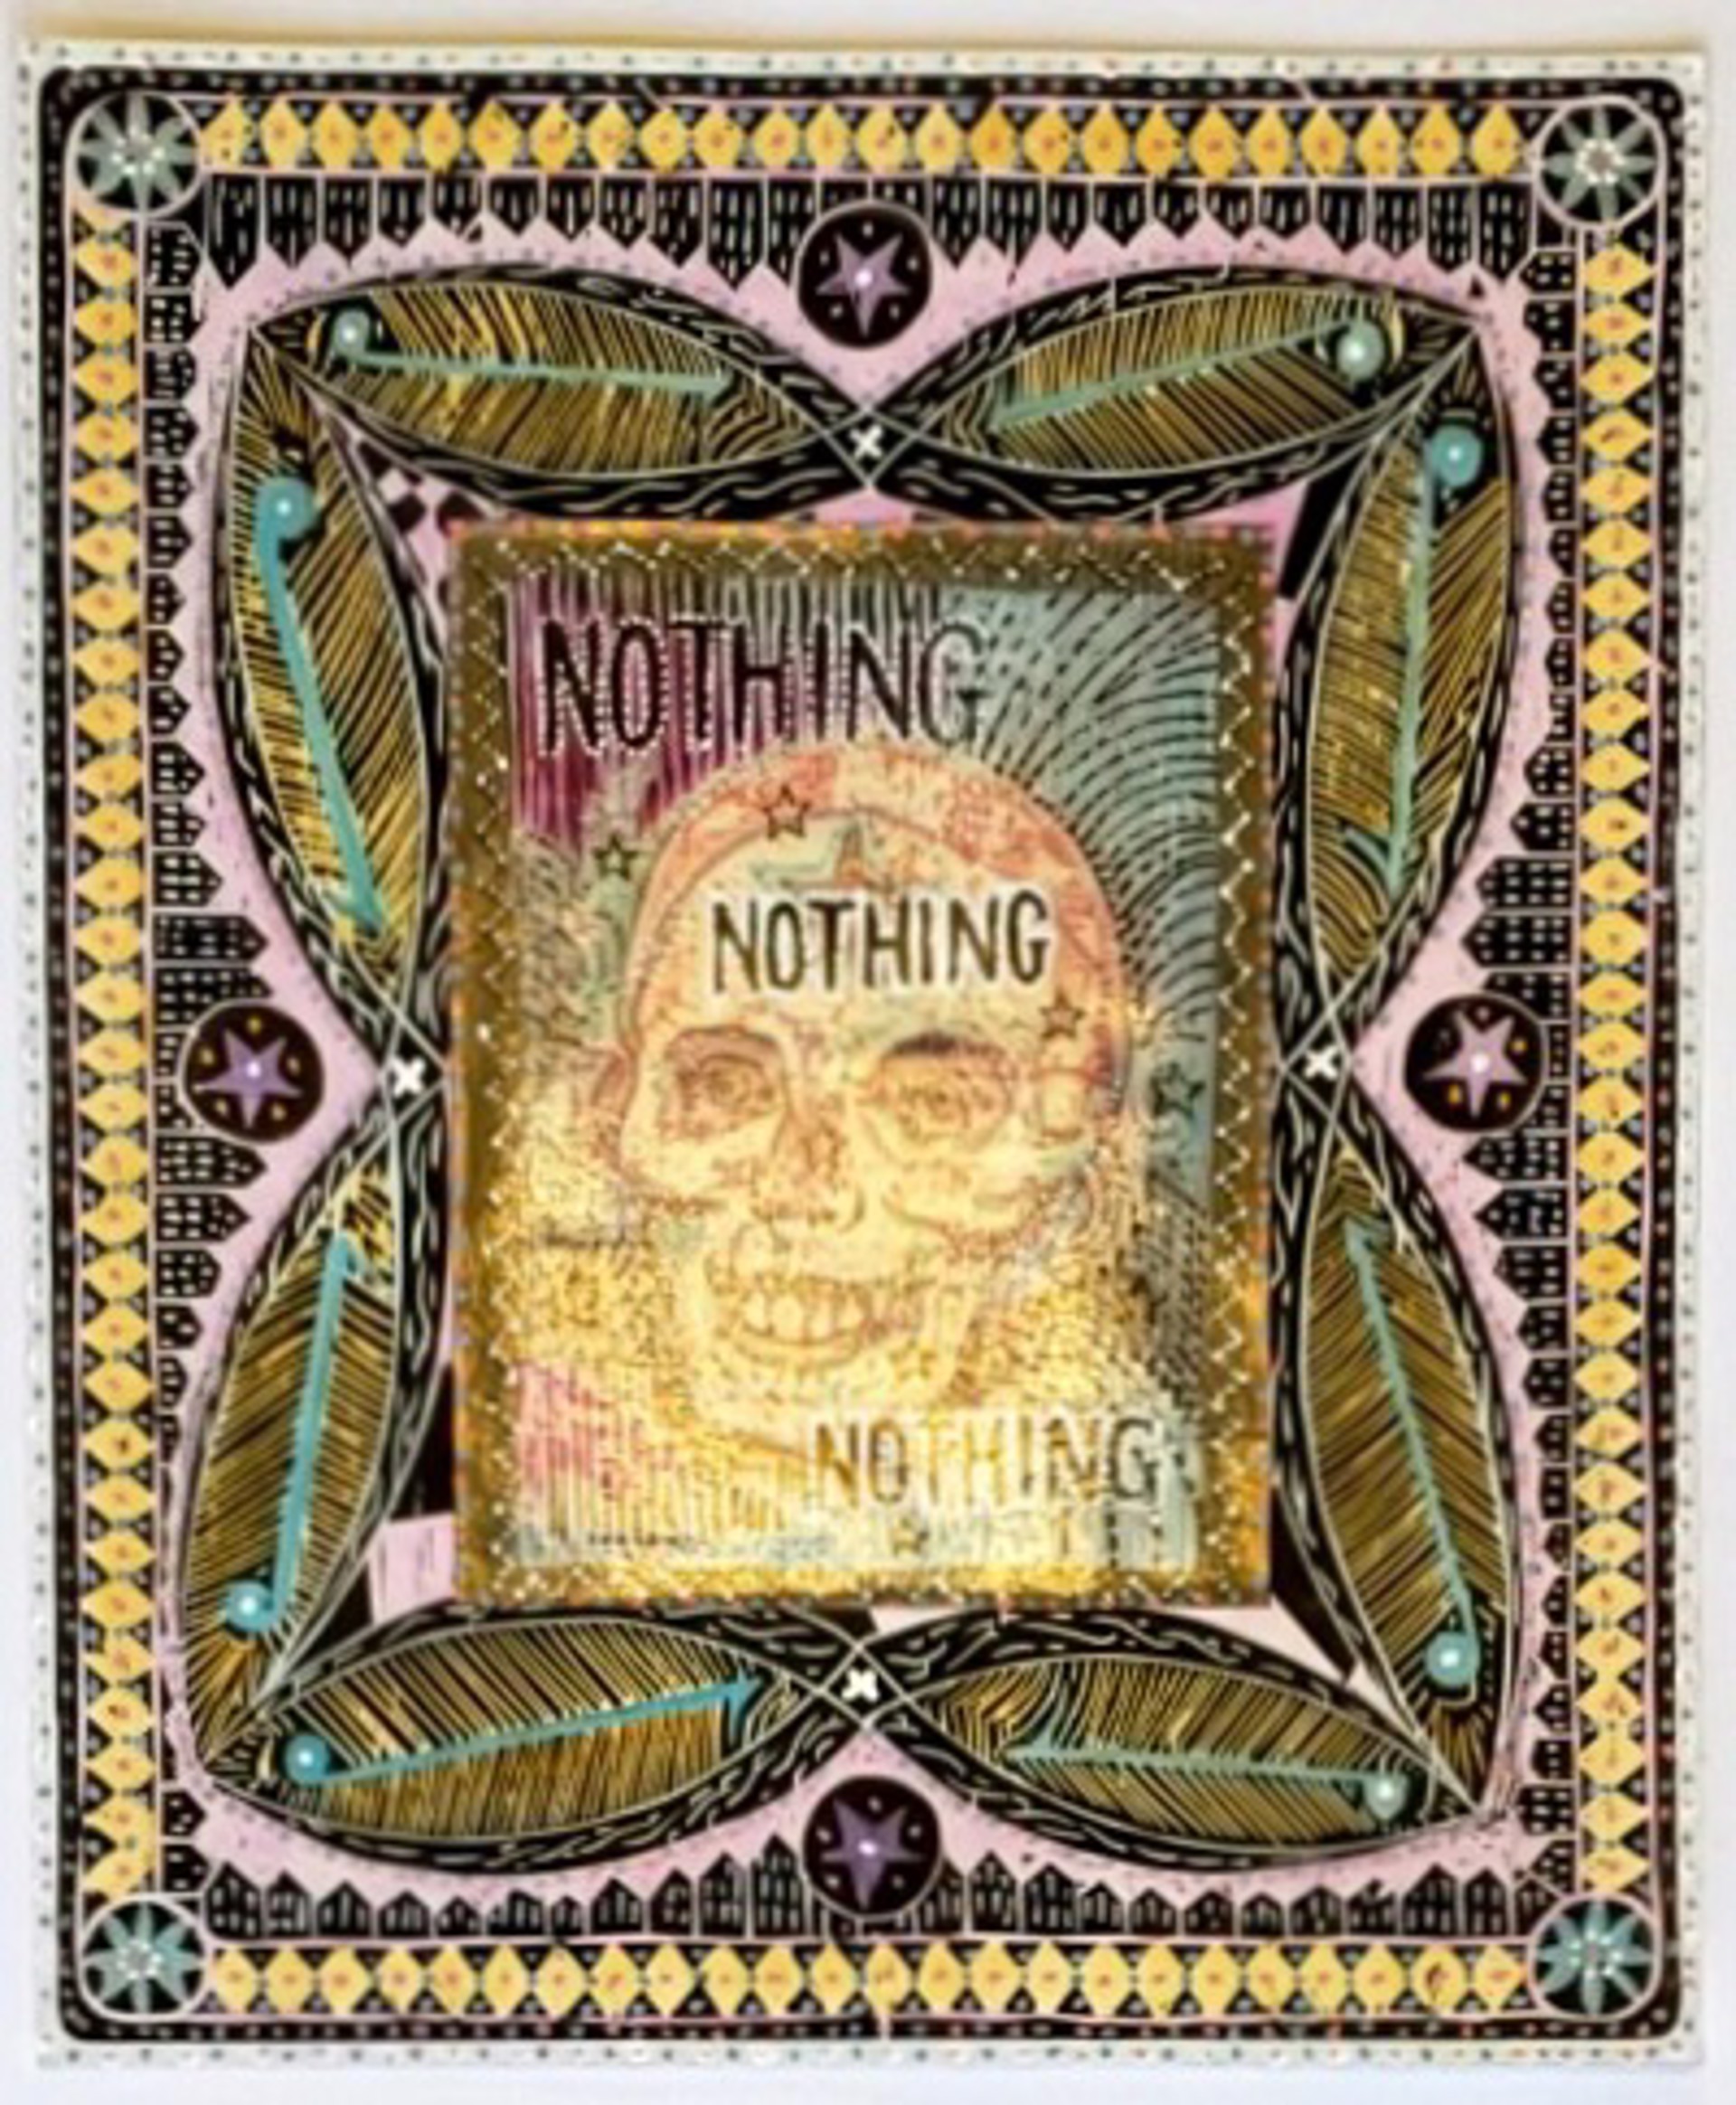 Nothing, Nothing, Nothing (Unframed) by Jon Langford & Jim Sherraden